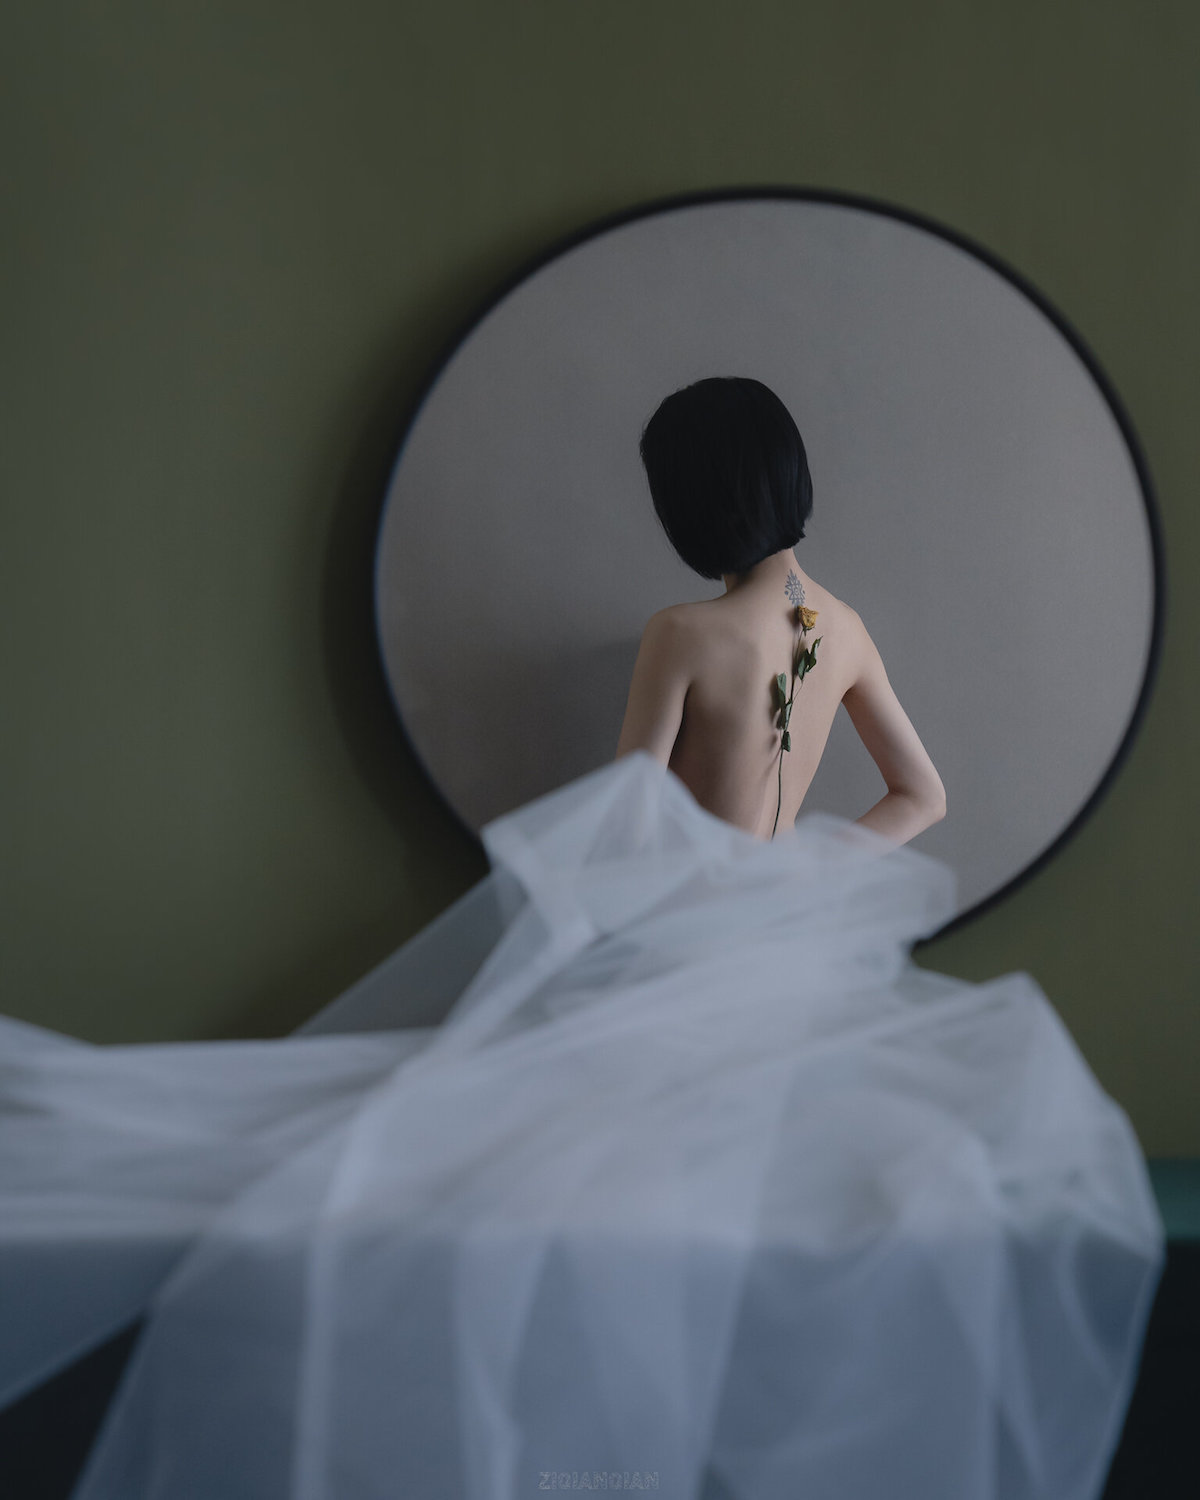 Surreal Self-Portrait Photography by Ziqian Liu